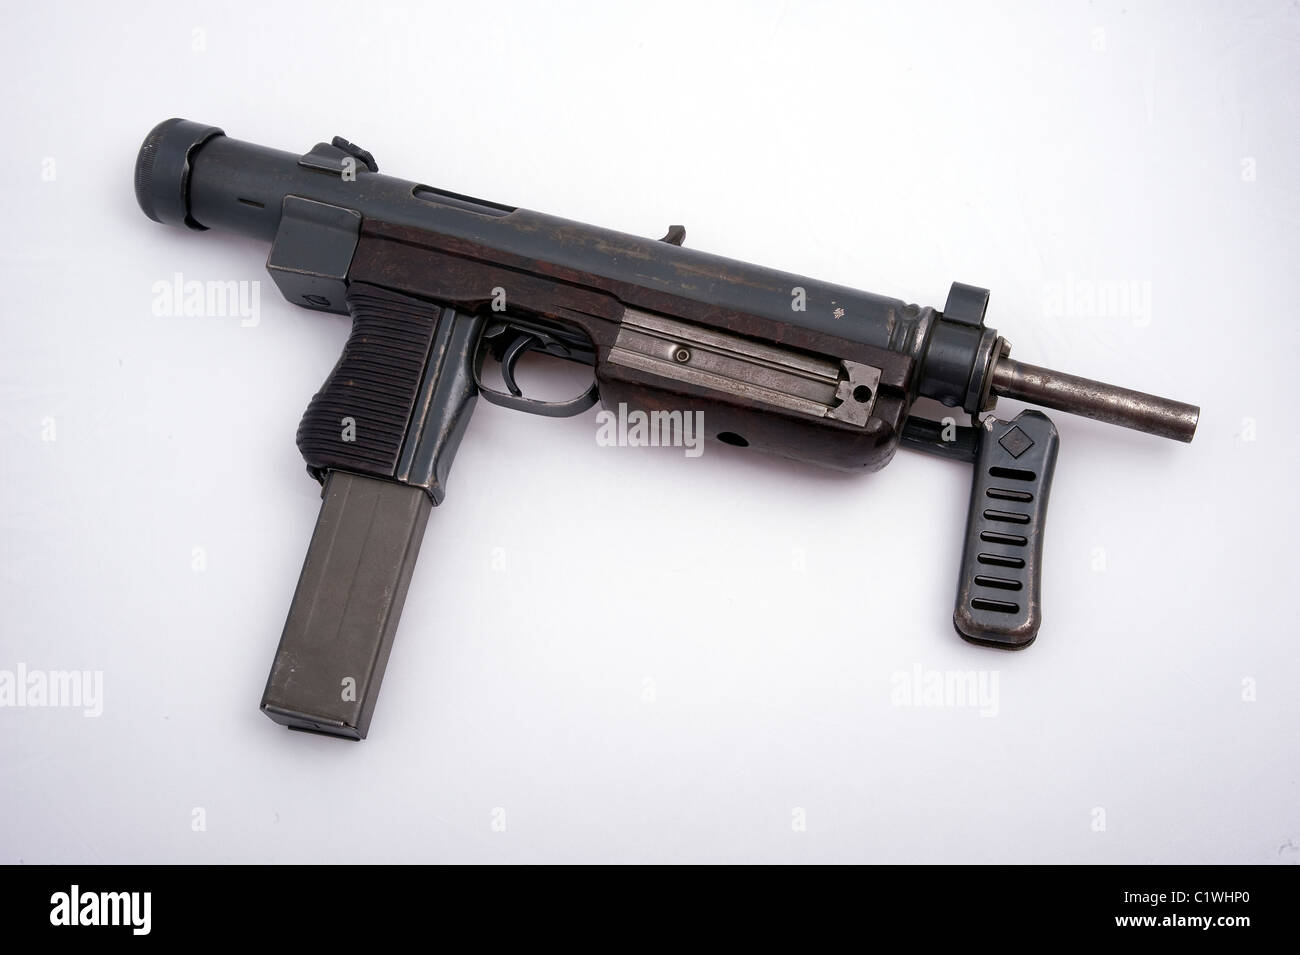 A sub machine gun, small, compact, deadly. Stock Photo